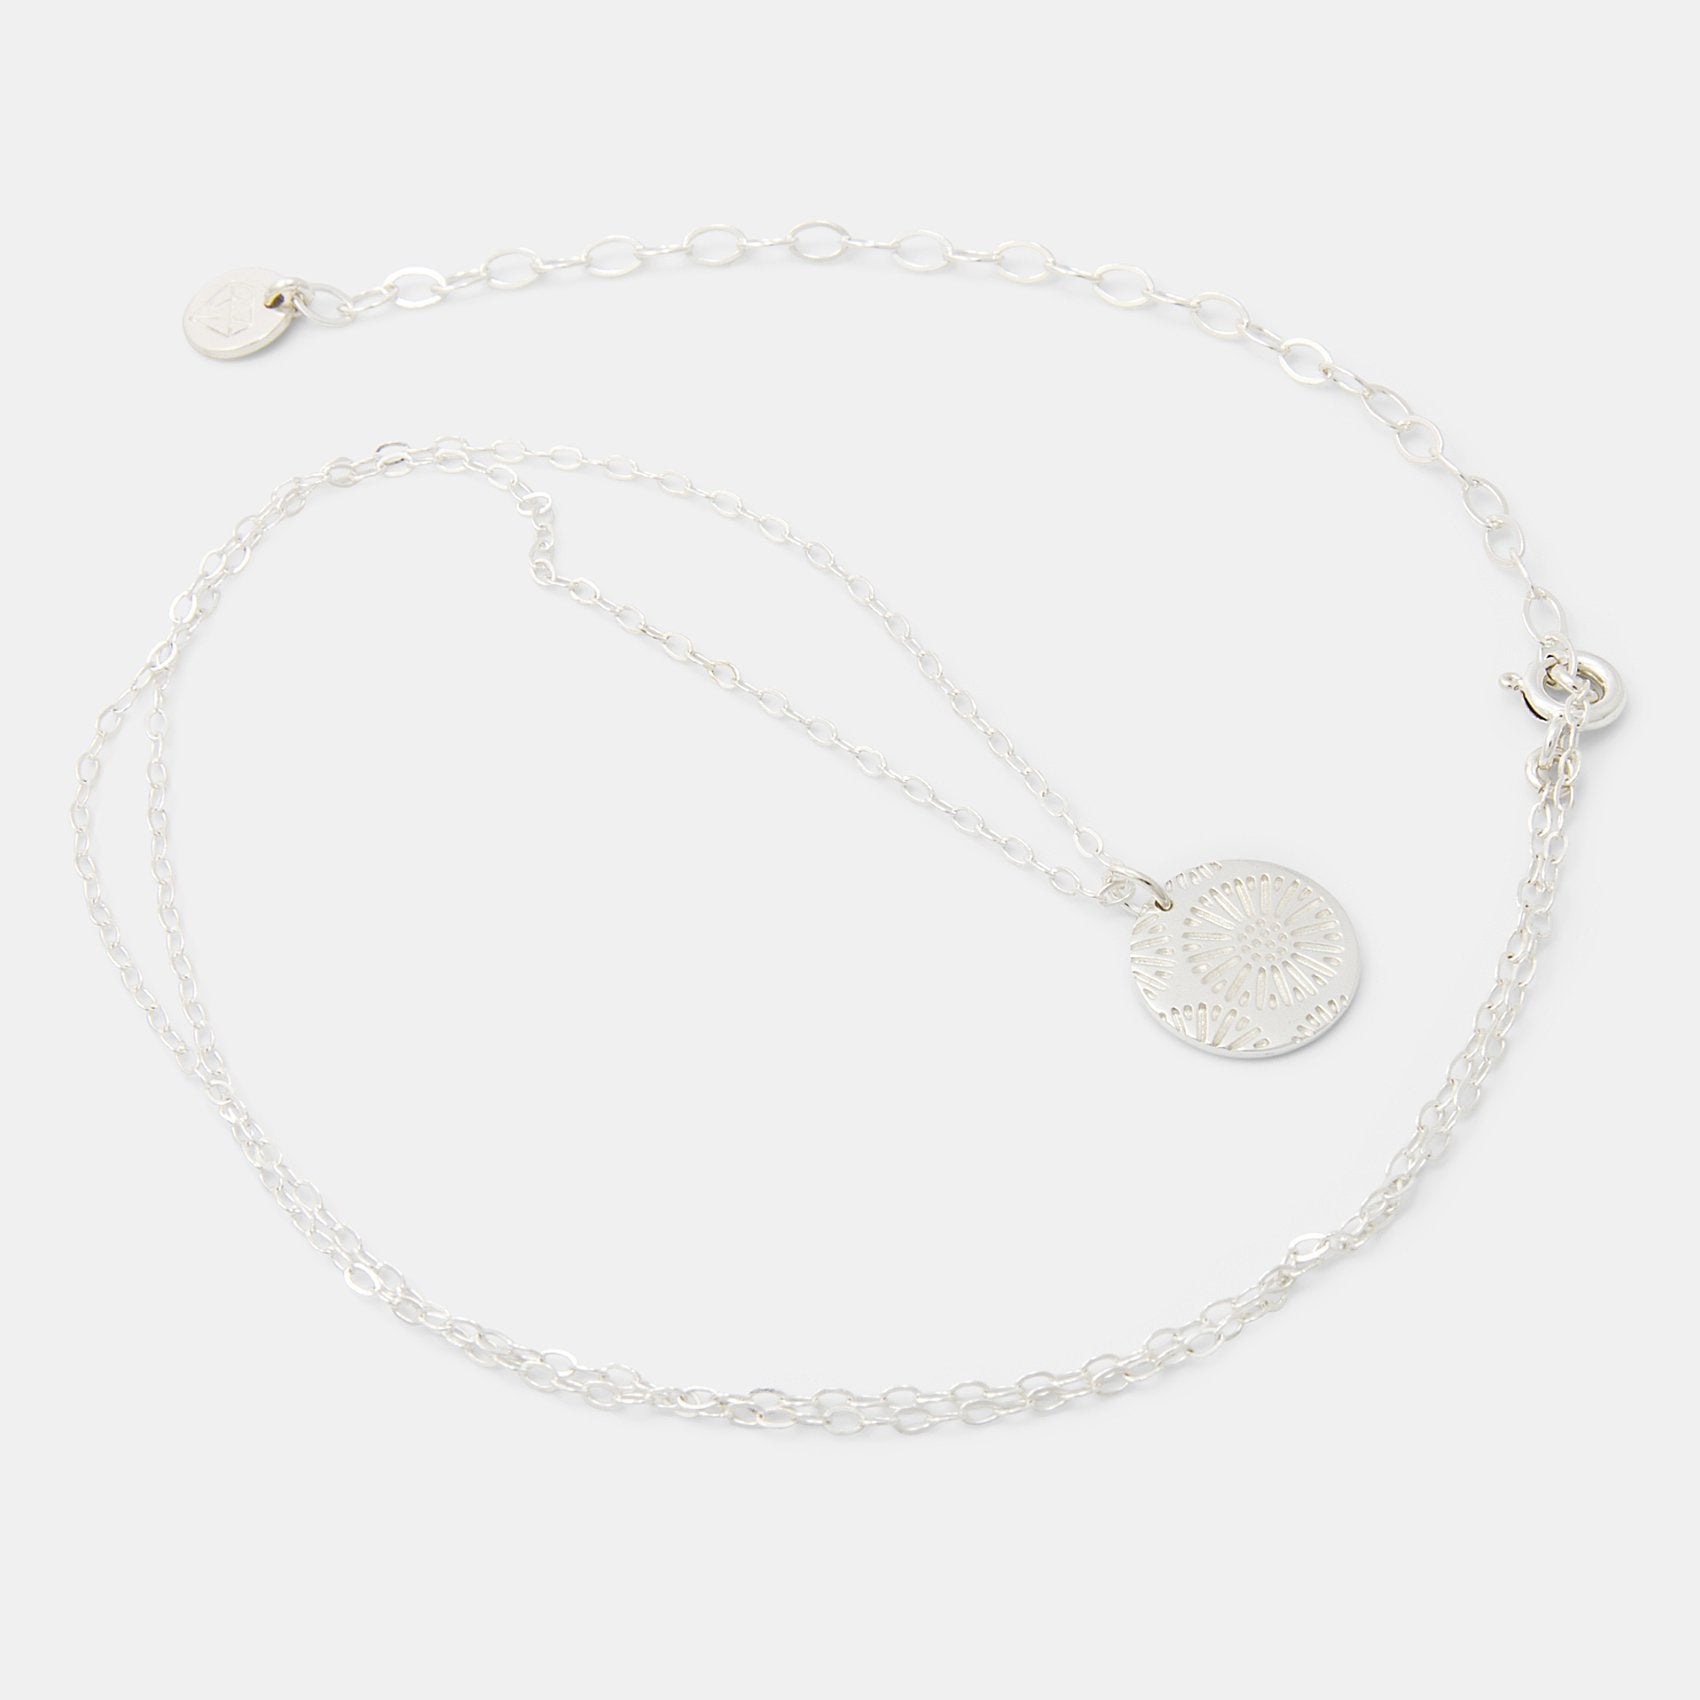 Coral texture silver pendant necklace - Simone Walsh Jewellery Australia